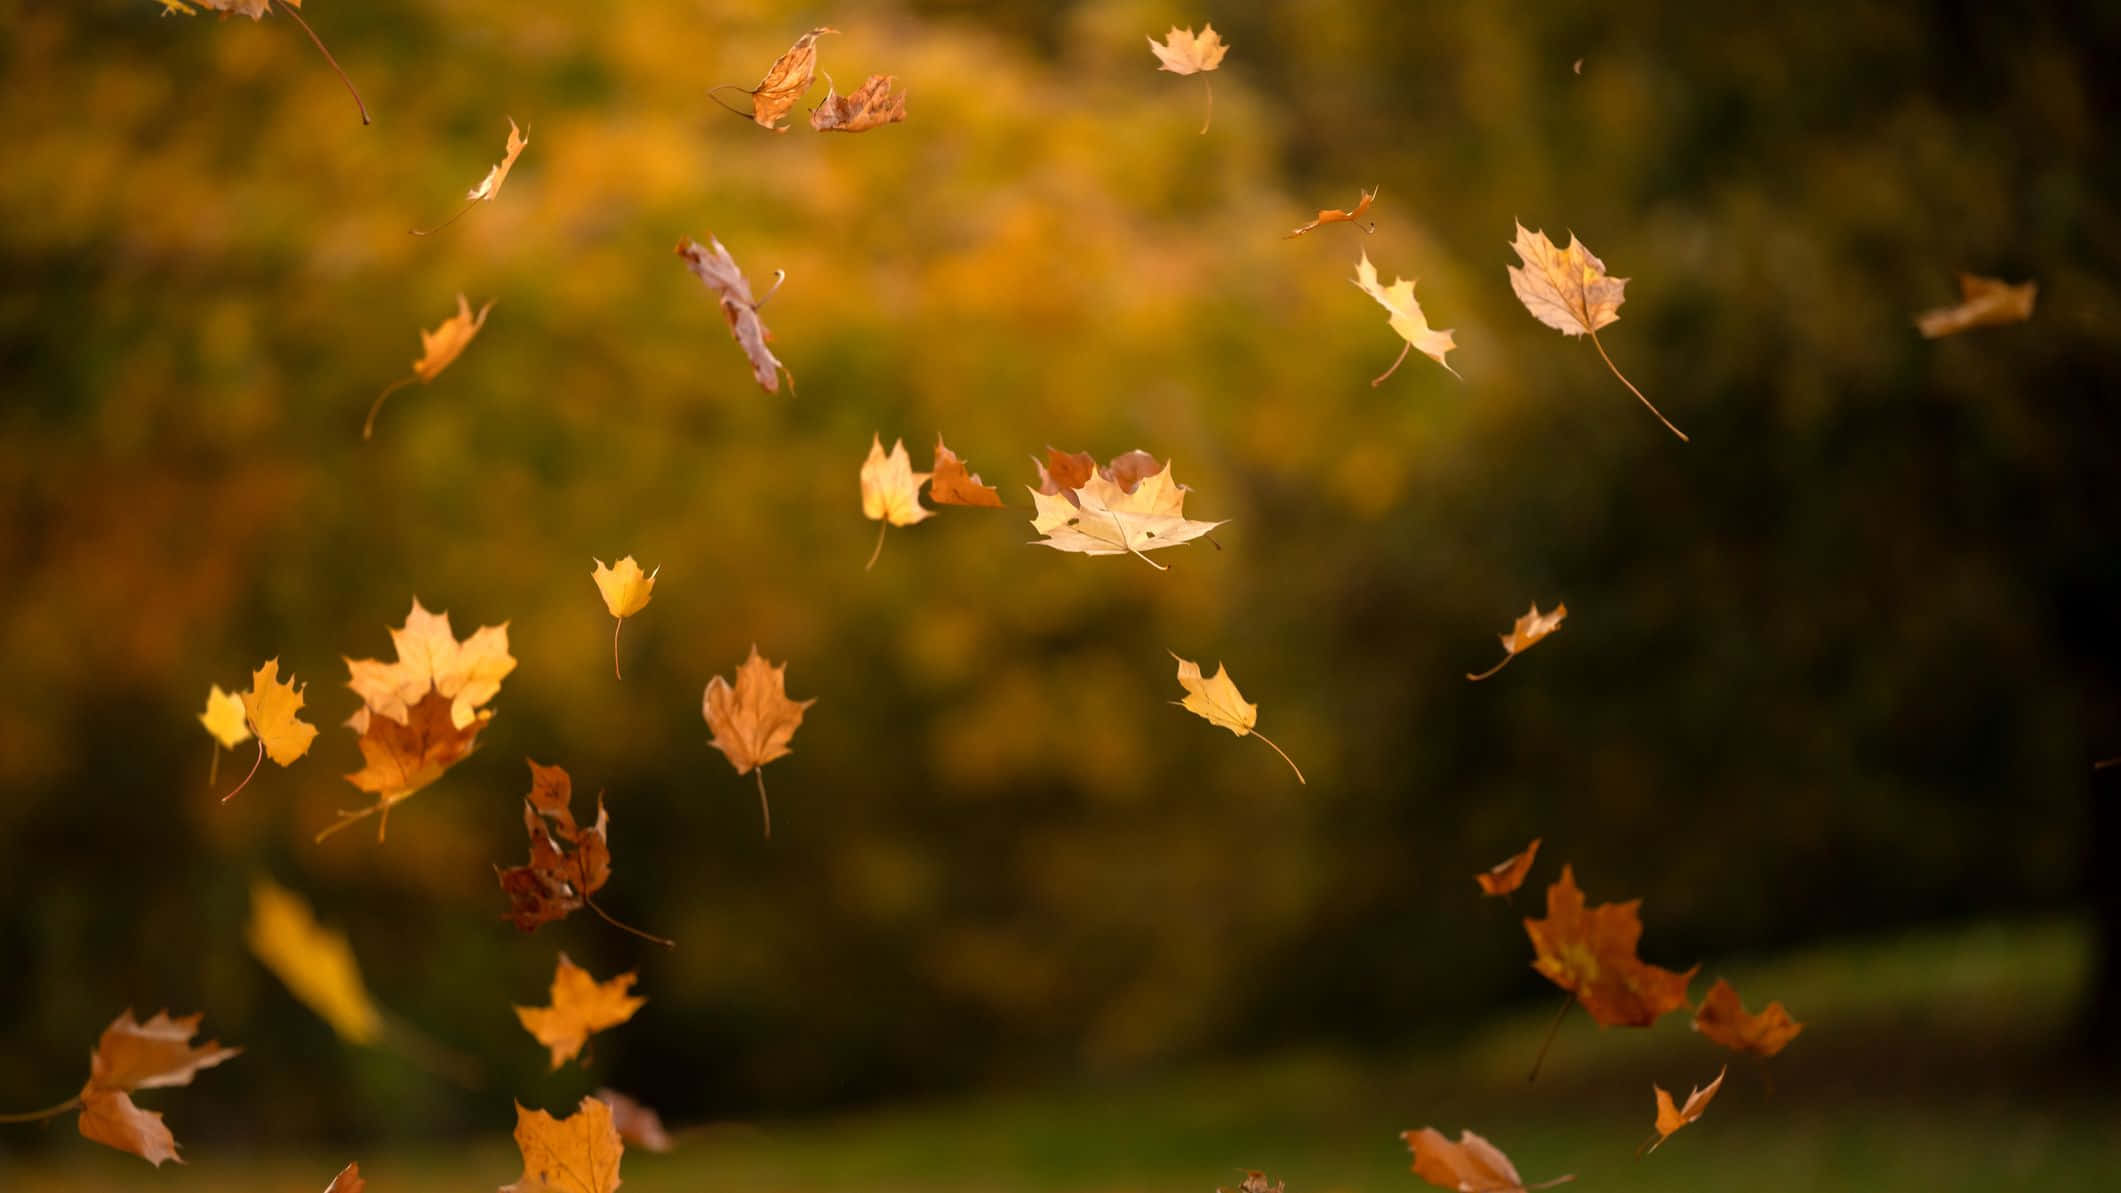 Golden Autumn Leaves against Blue Sky Background